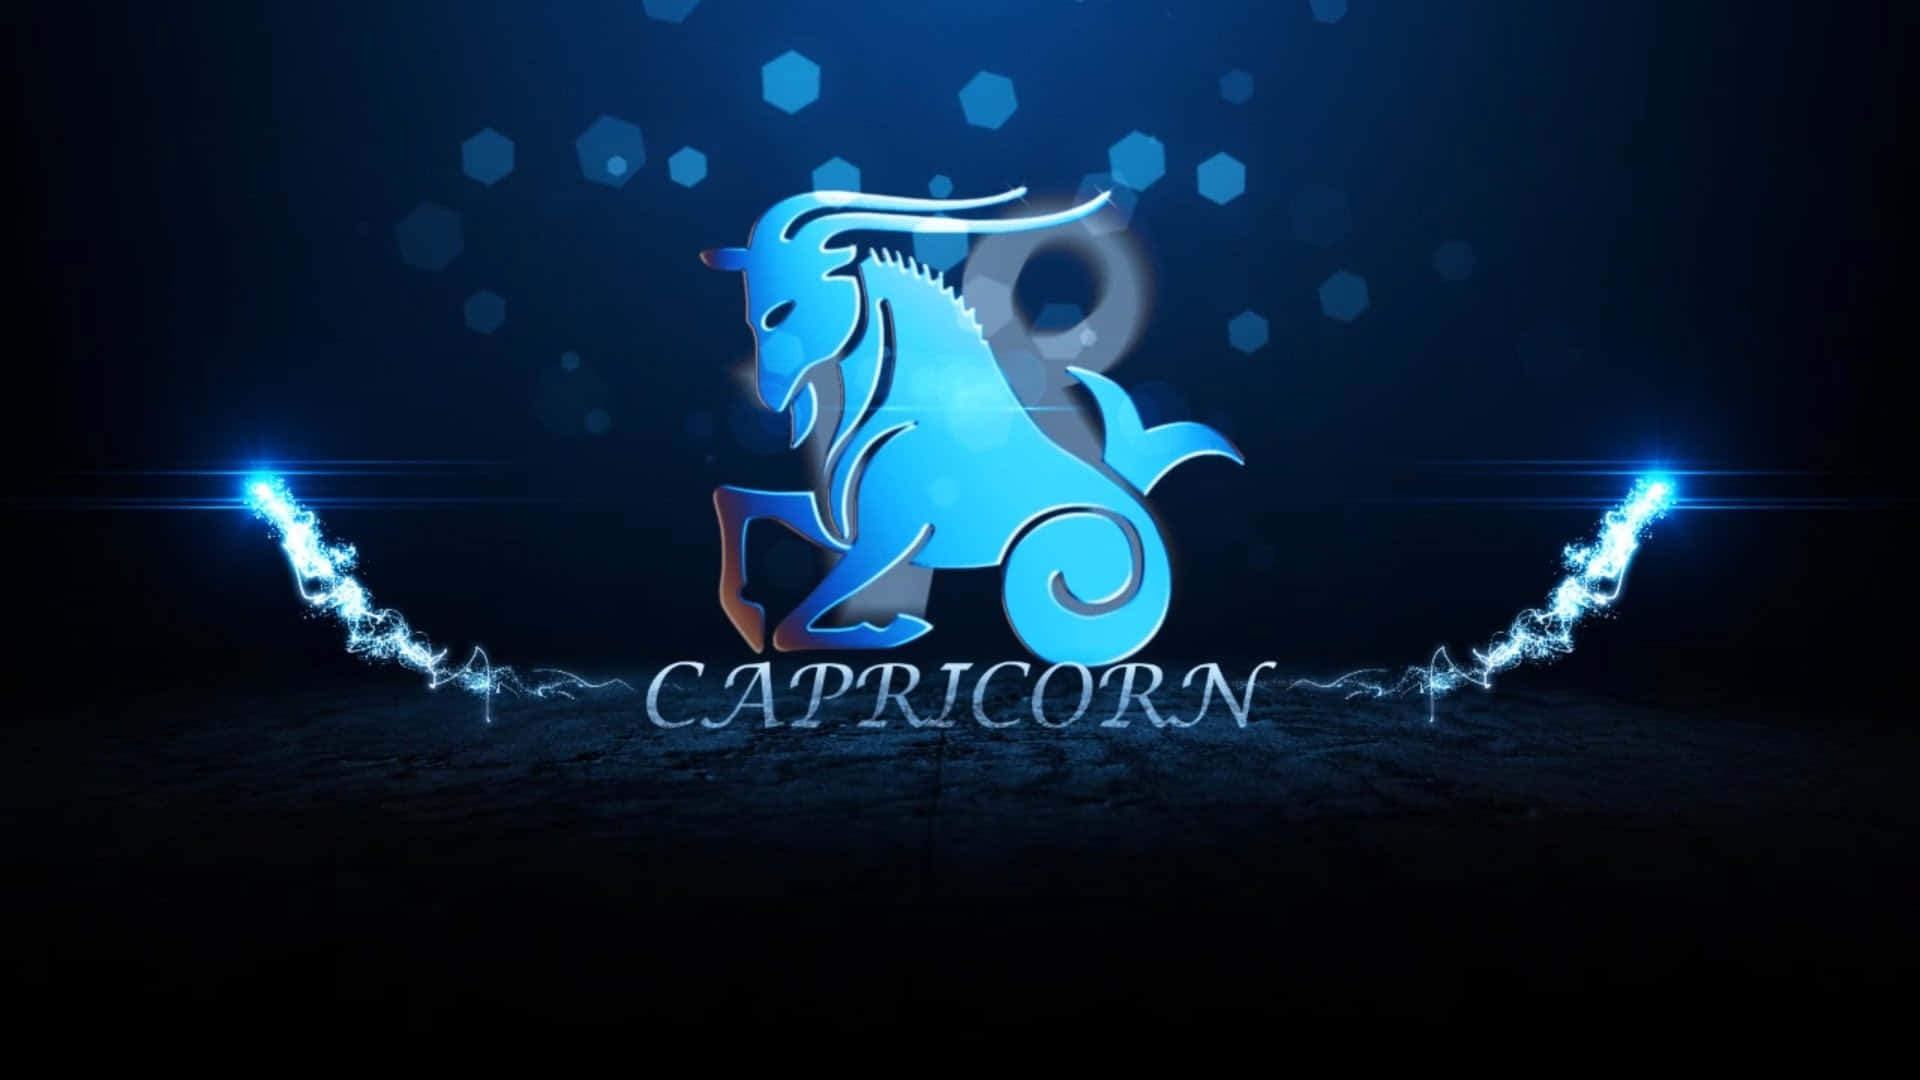 Capricorn Pictures